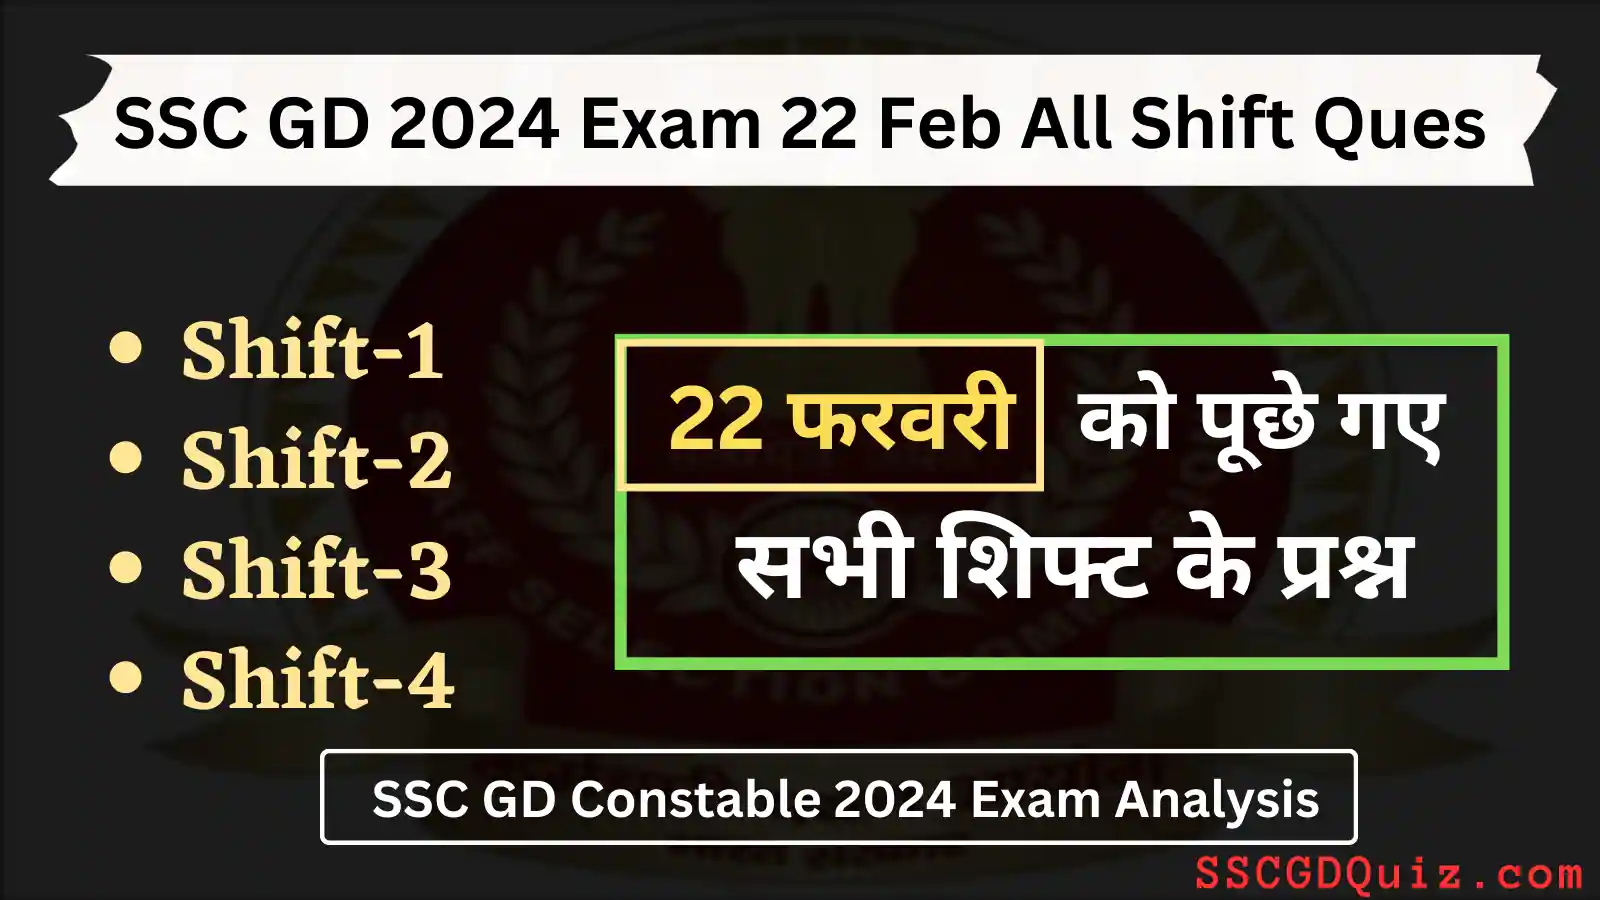 SSC GD 2024 Exam 22 Feb All Shift Ques